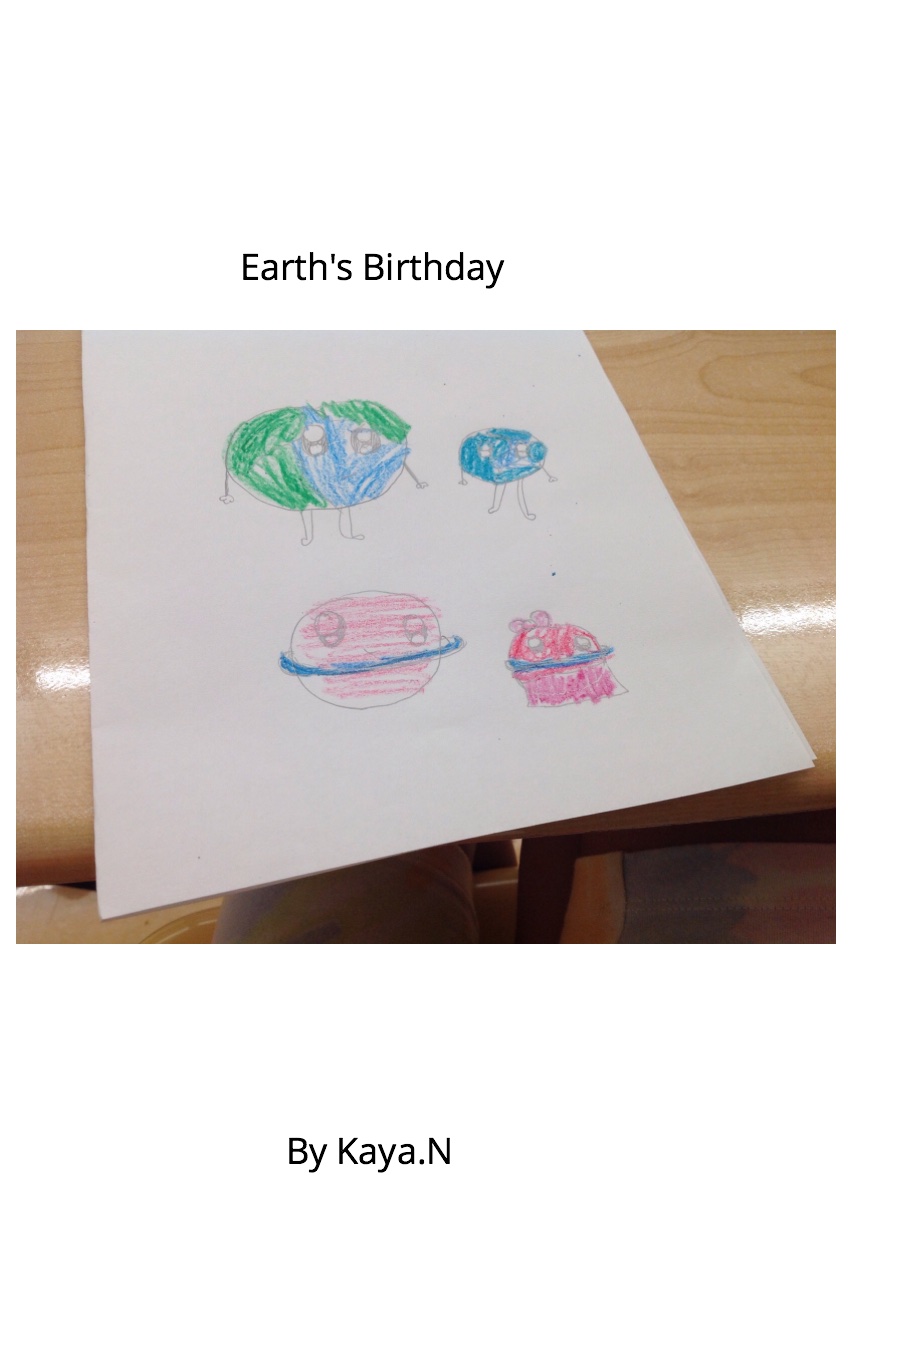 Earth’s Birthday by Kaya N